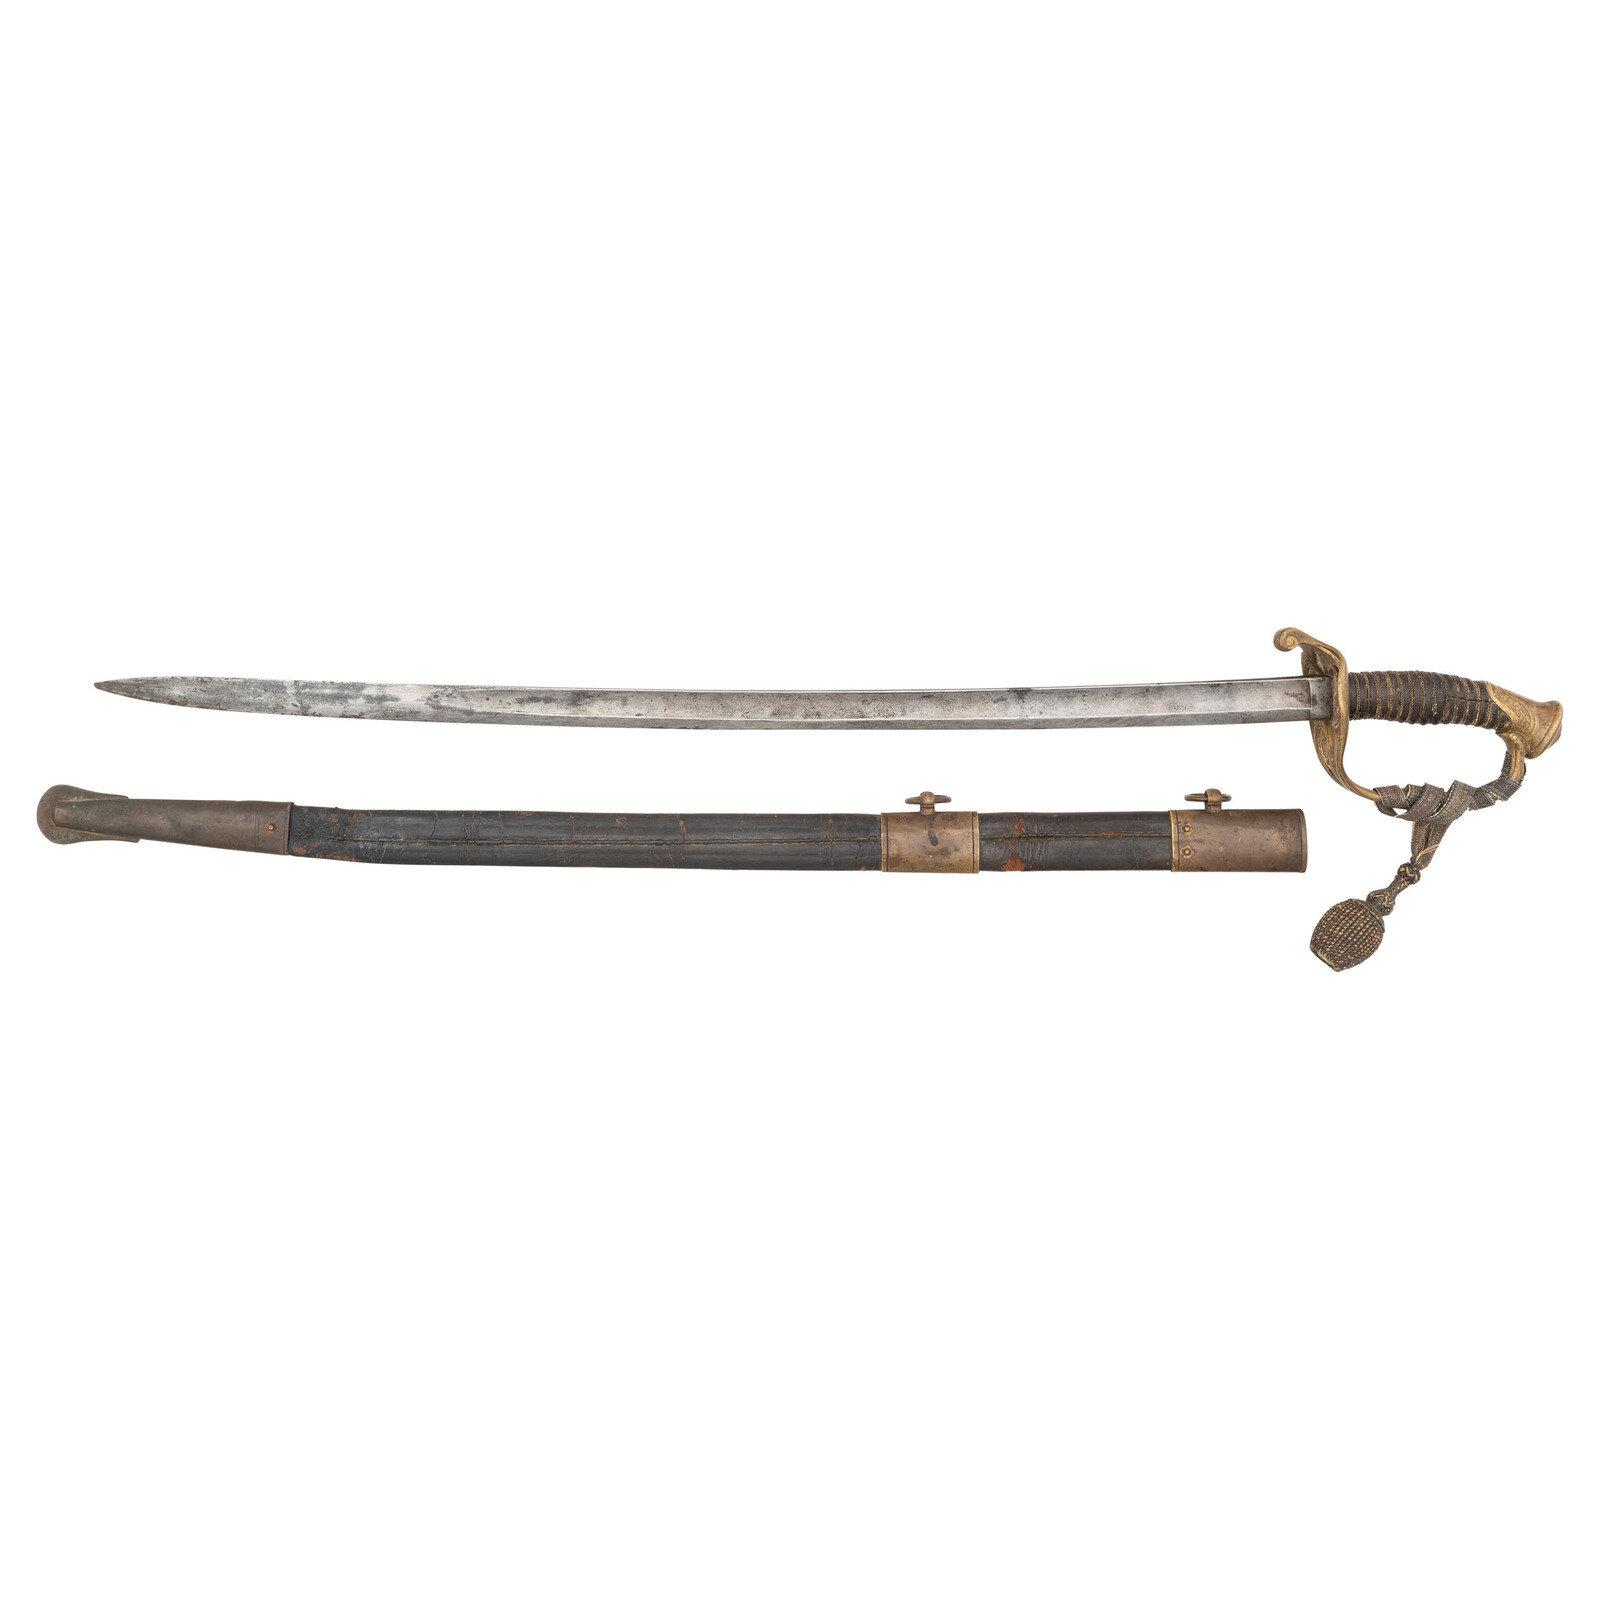 1850 Foot Officers Sword Identified to Captain Julius Ellendorf - WIA at Cold Harbor